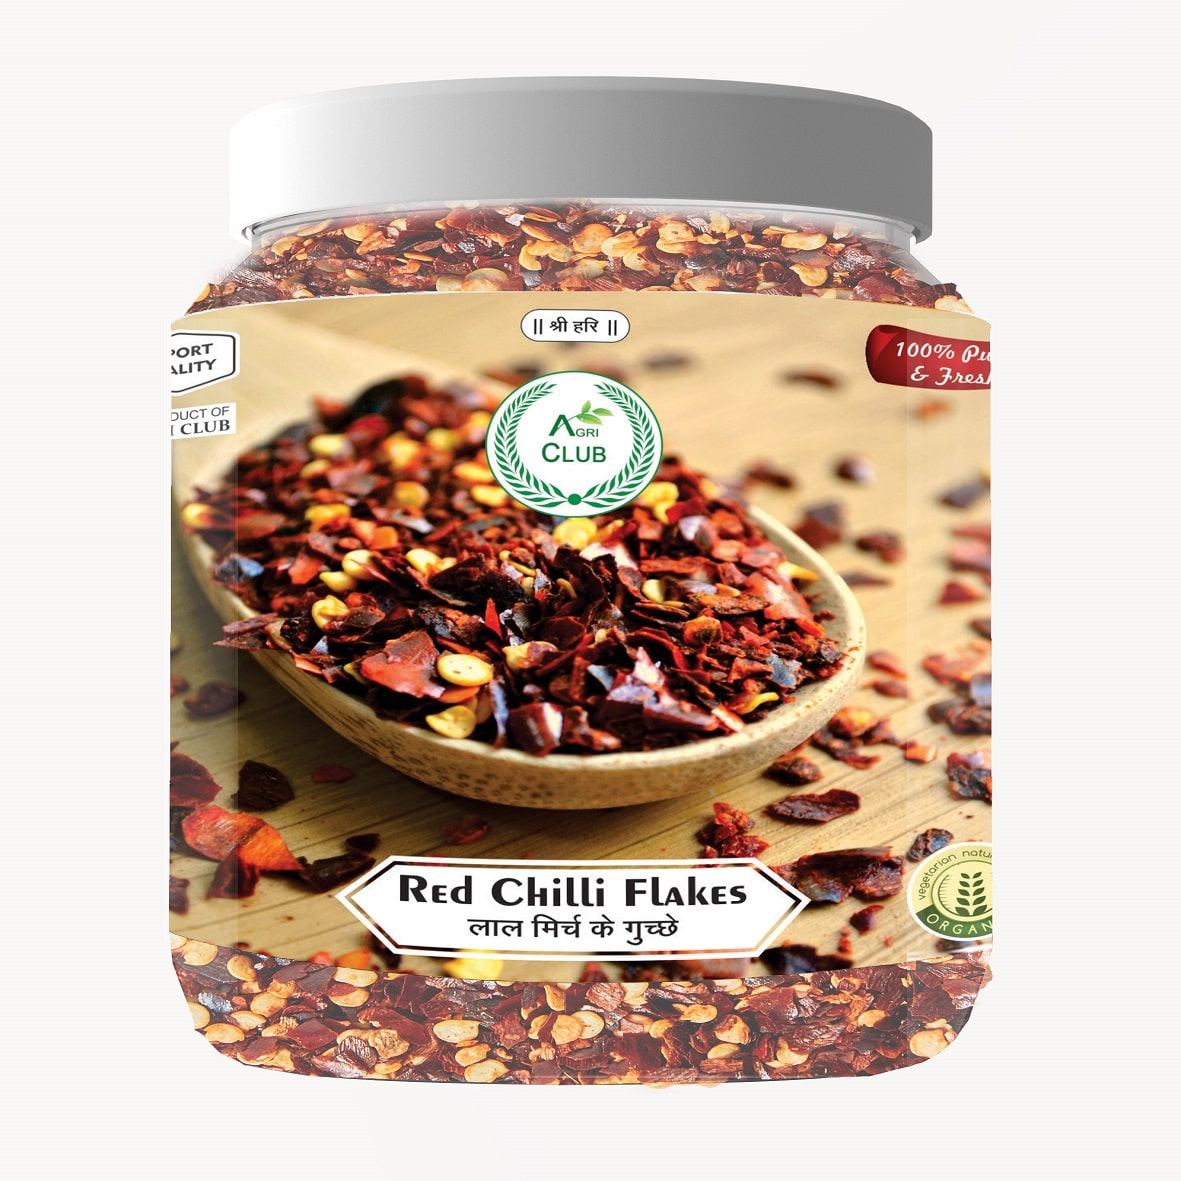 Red Chilli Flakes 100% Premium Quality